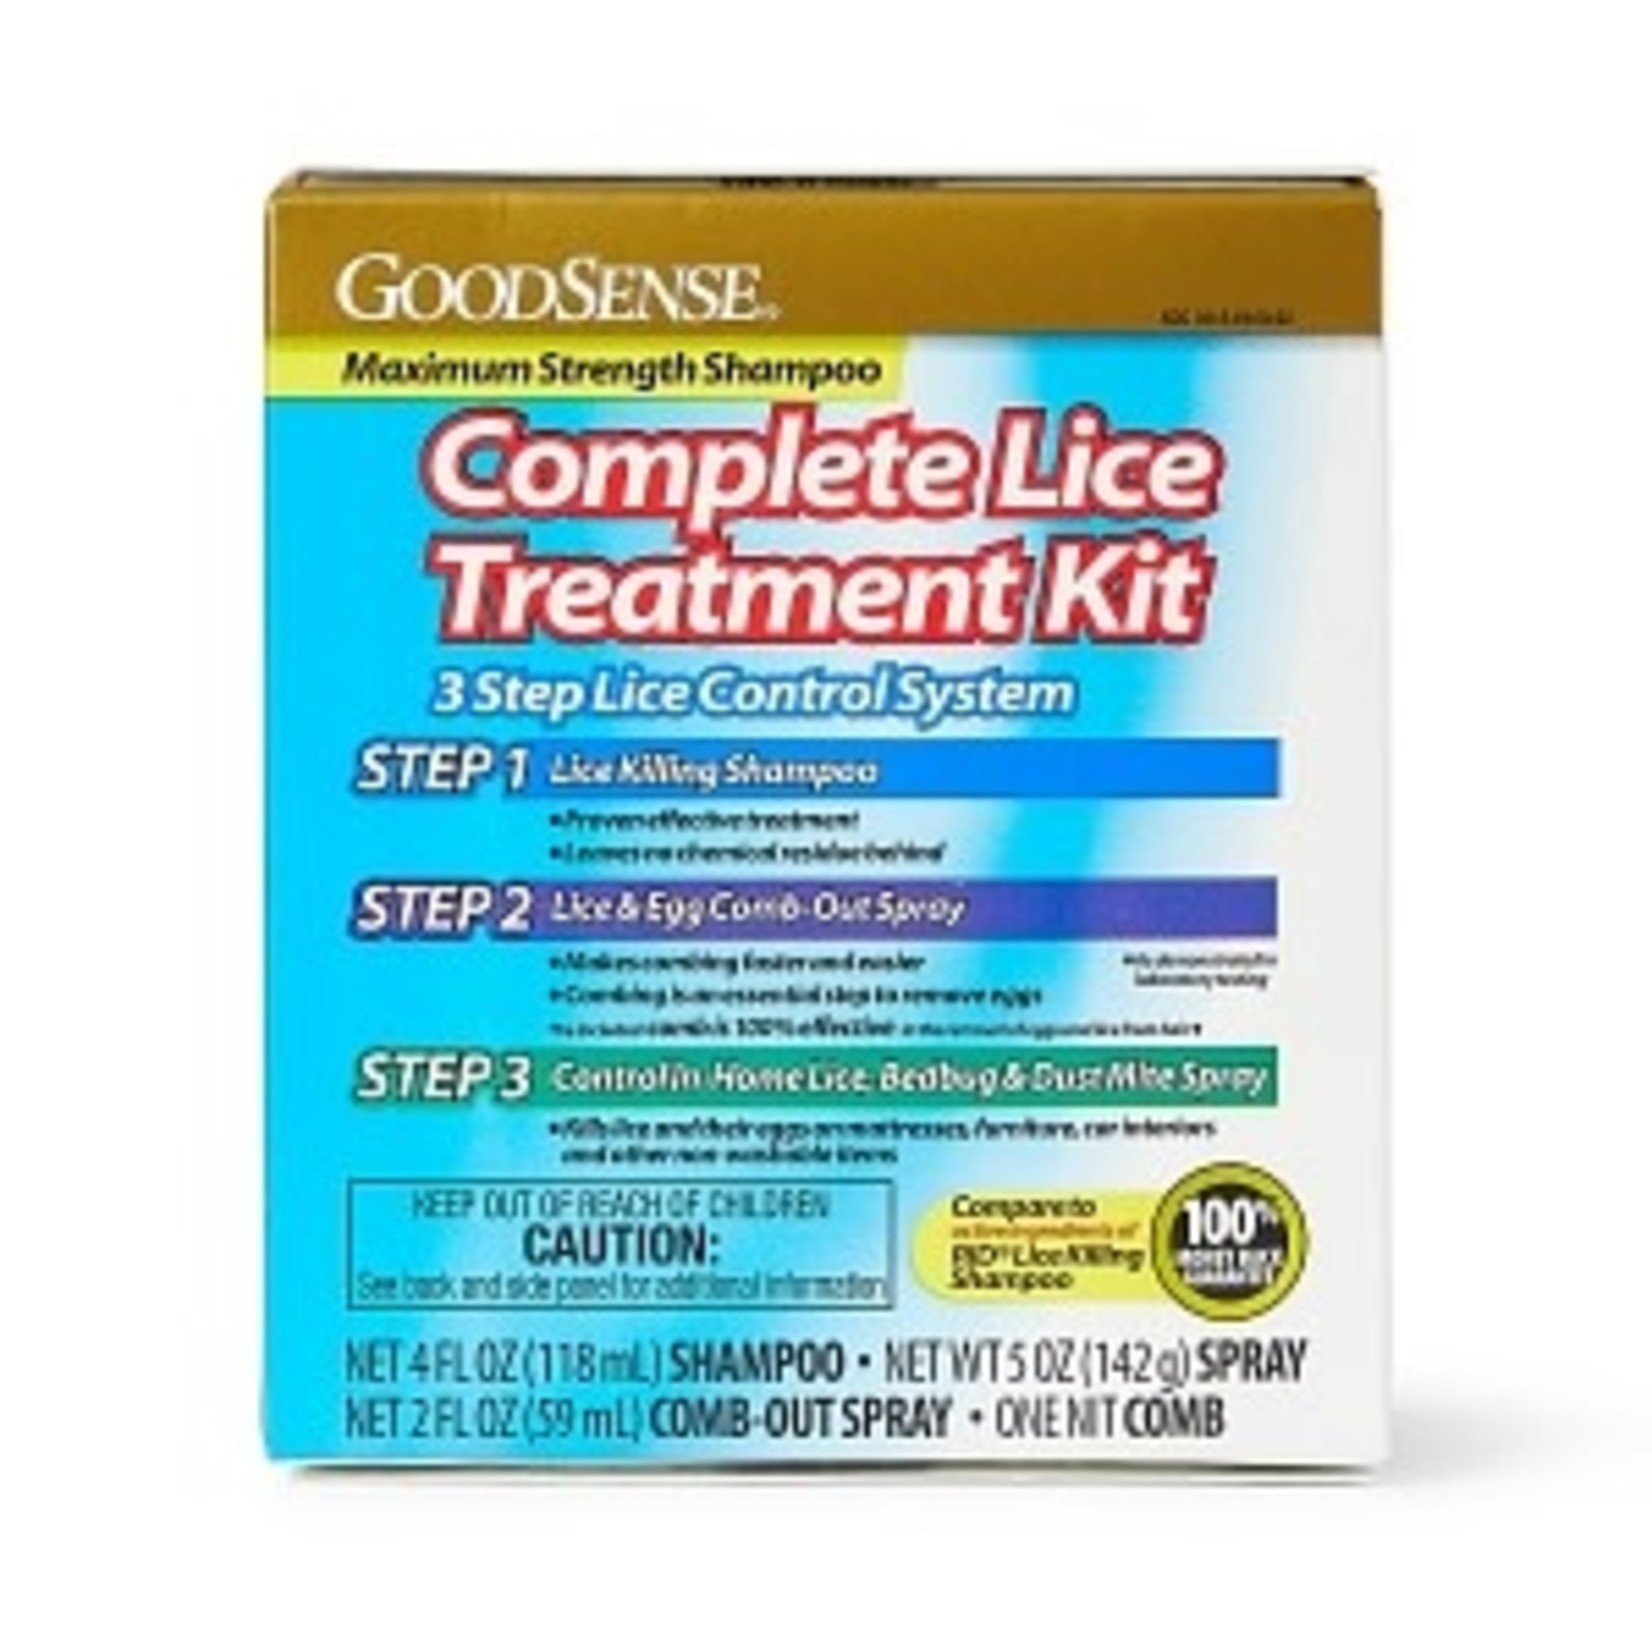 Good Sense Complete Lice Treatment Kit